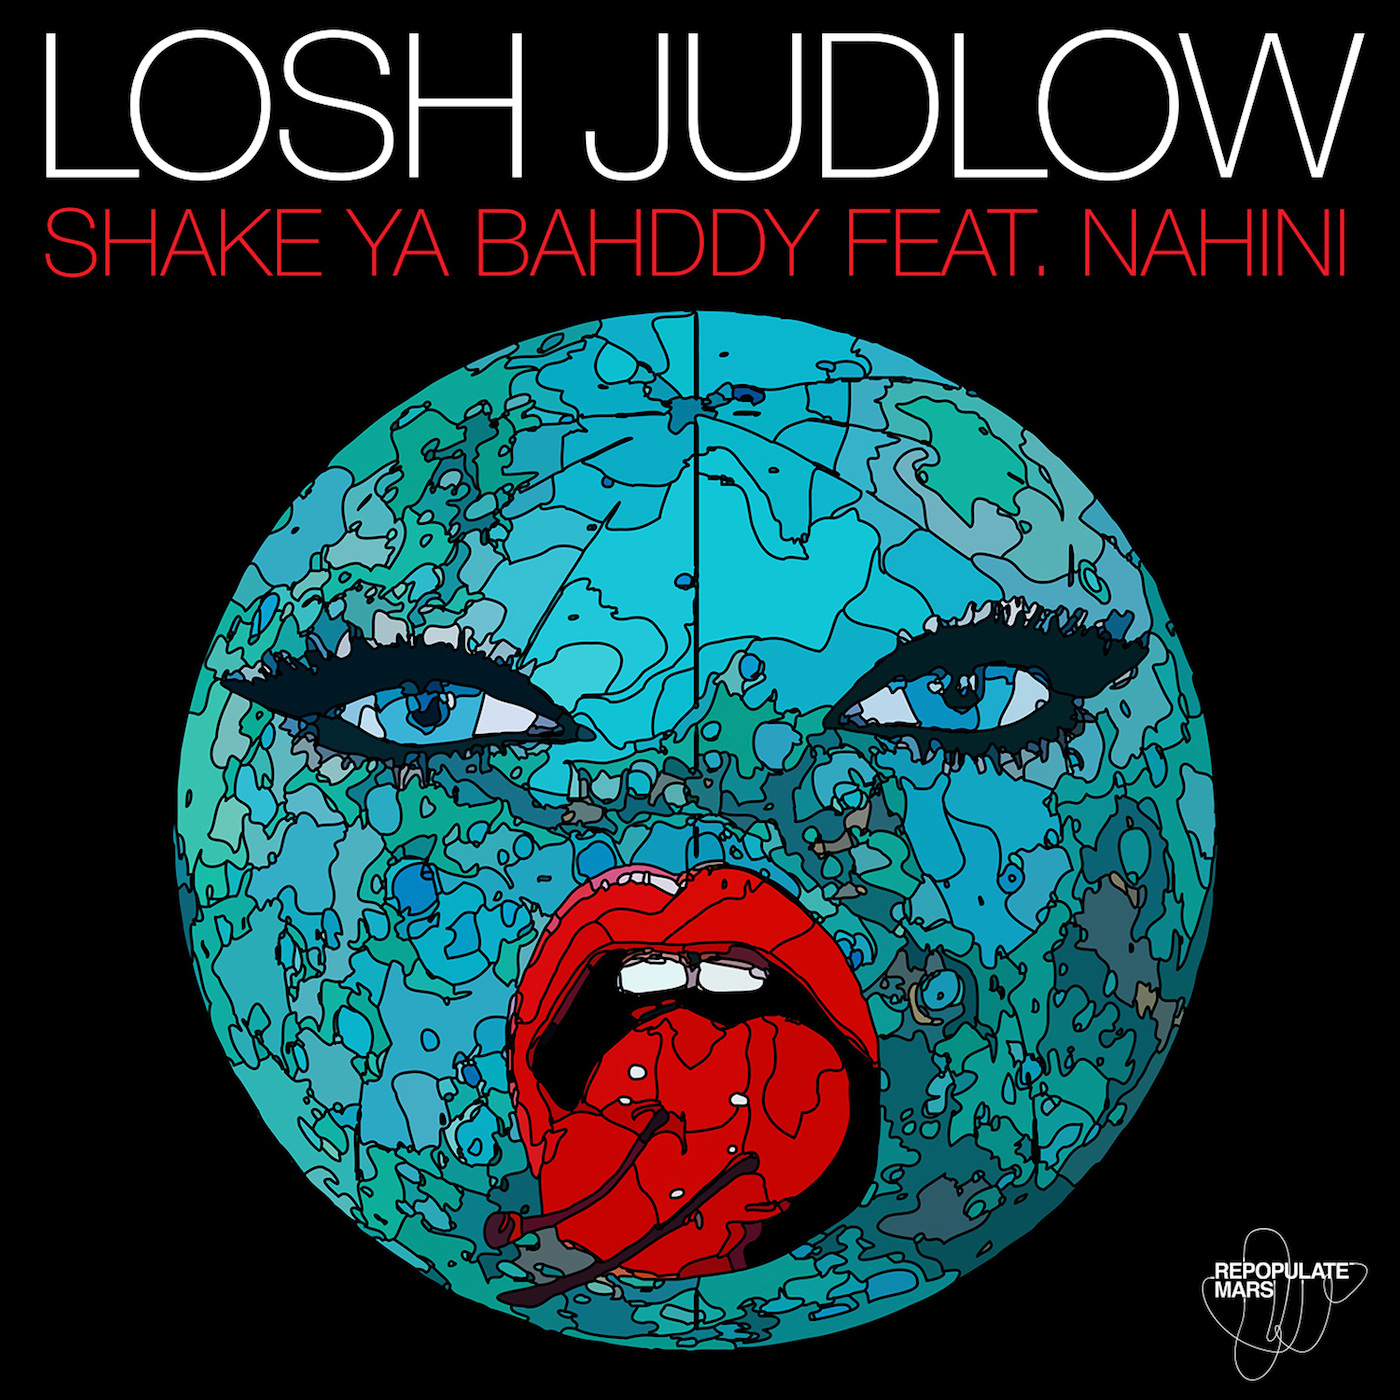 Losh Judlow - Shake Ya Bahddy feat.Nahini / Repopulate Mars